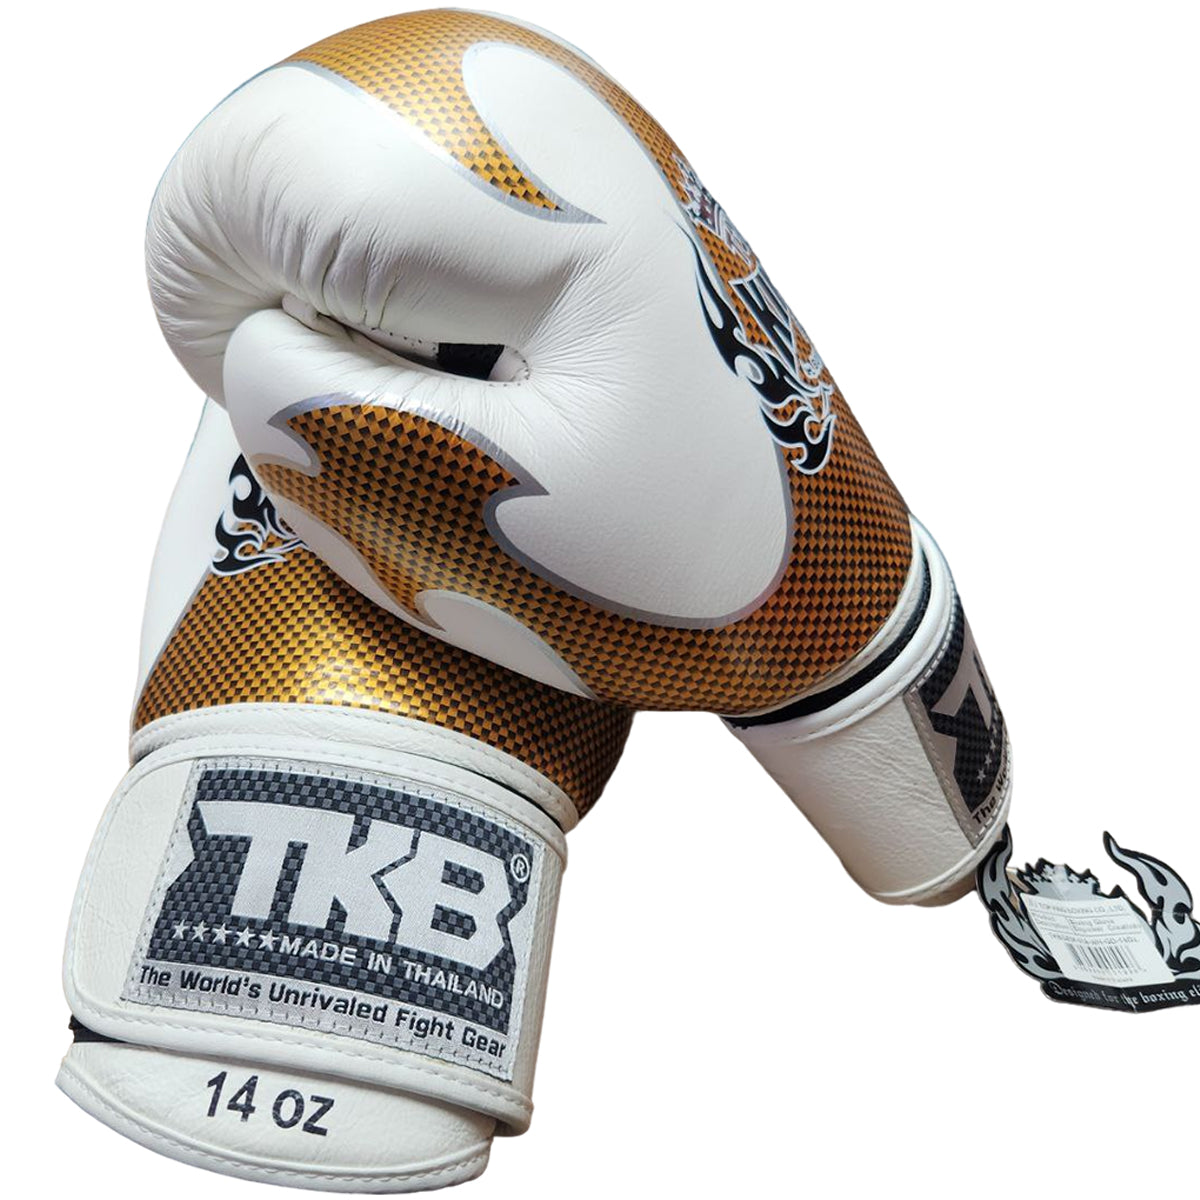 Boxing Gloves Top King TKBGEM-01 Air White Gold Empower Creativity (Old Logo)